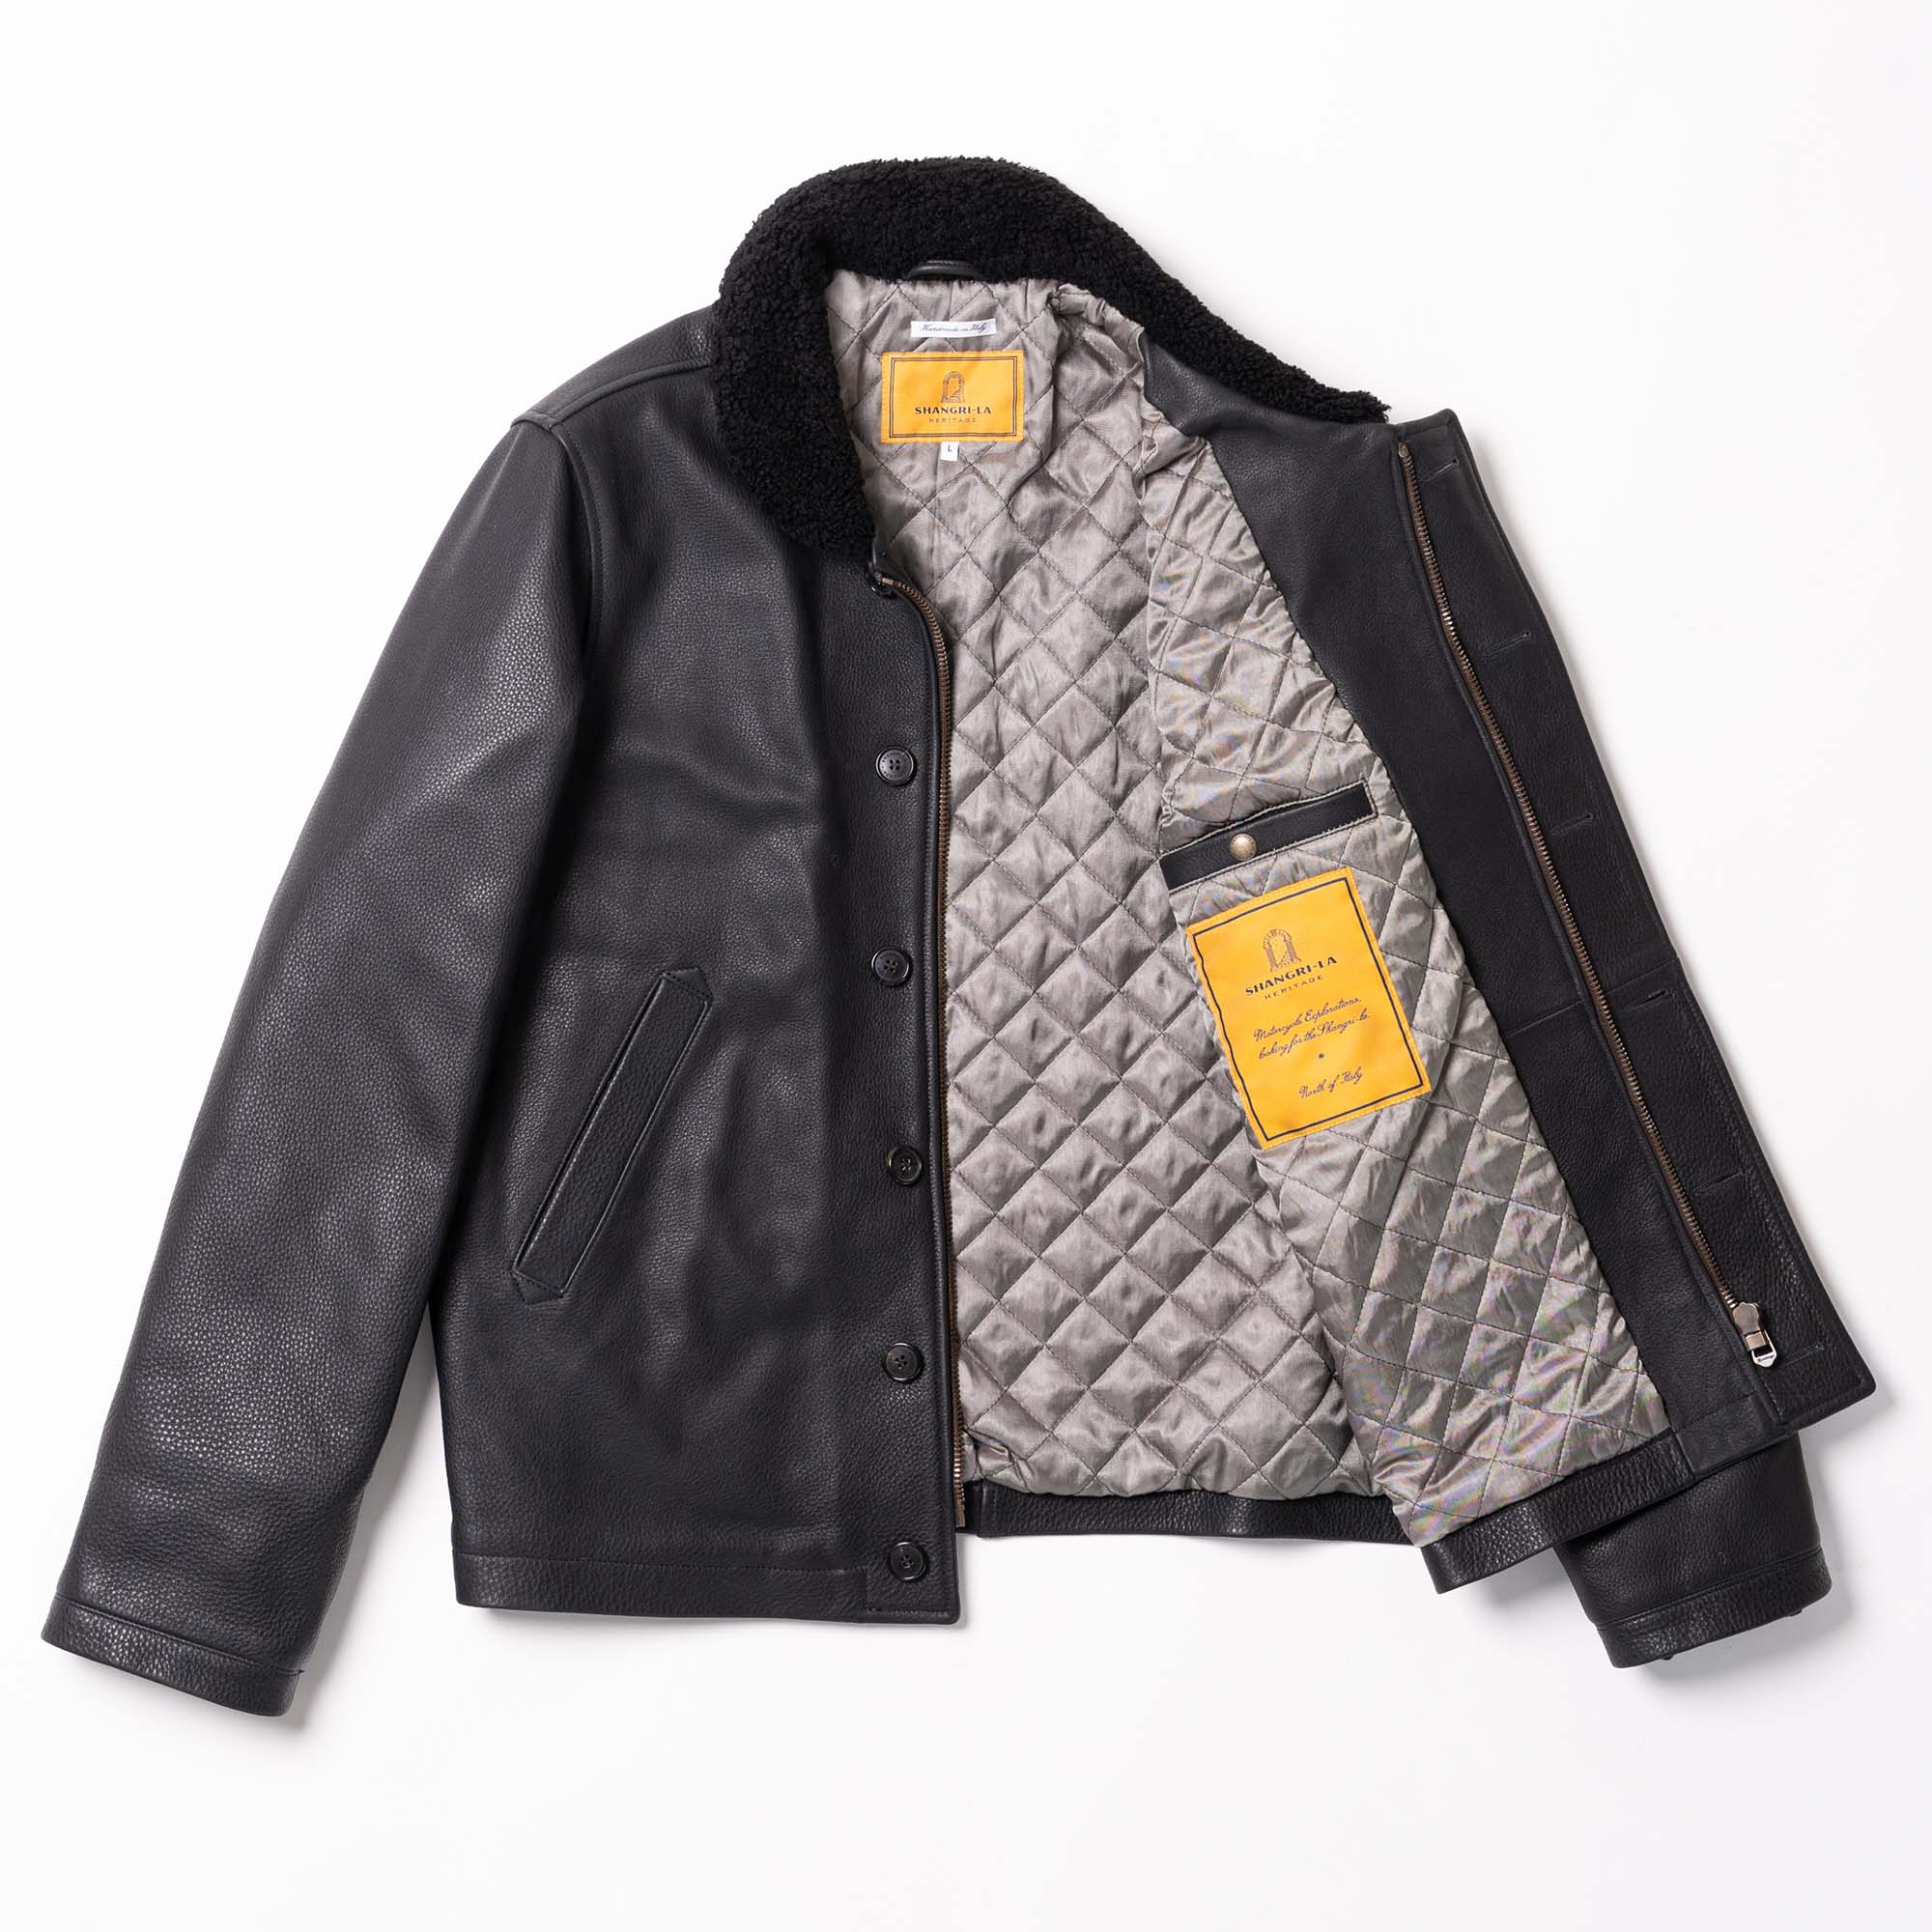 "Deck" N-1 Black Aniline Leather Jacket